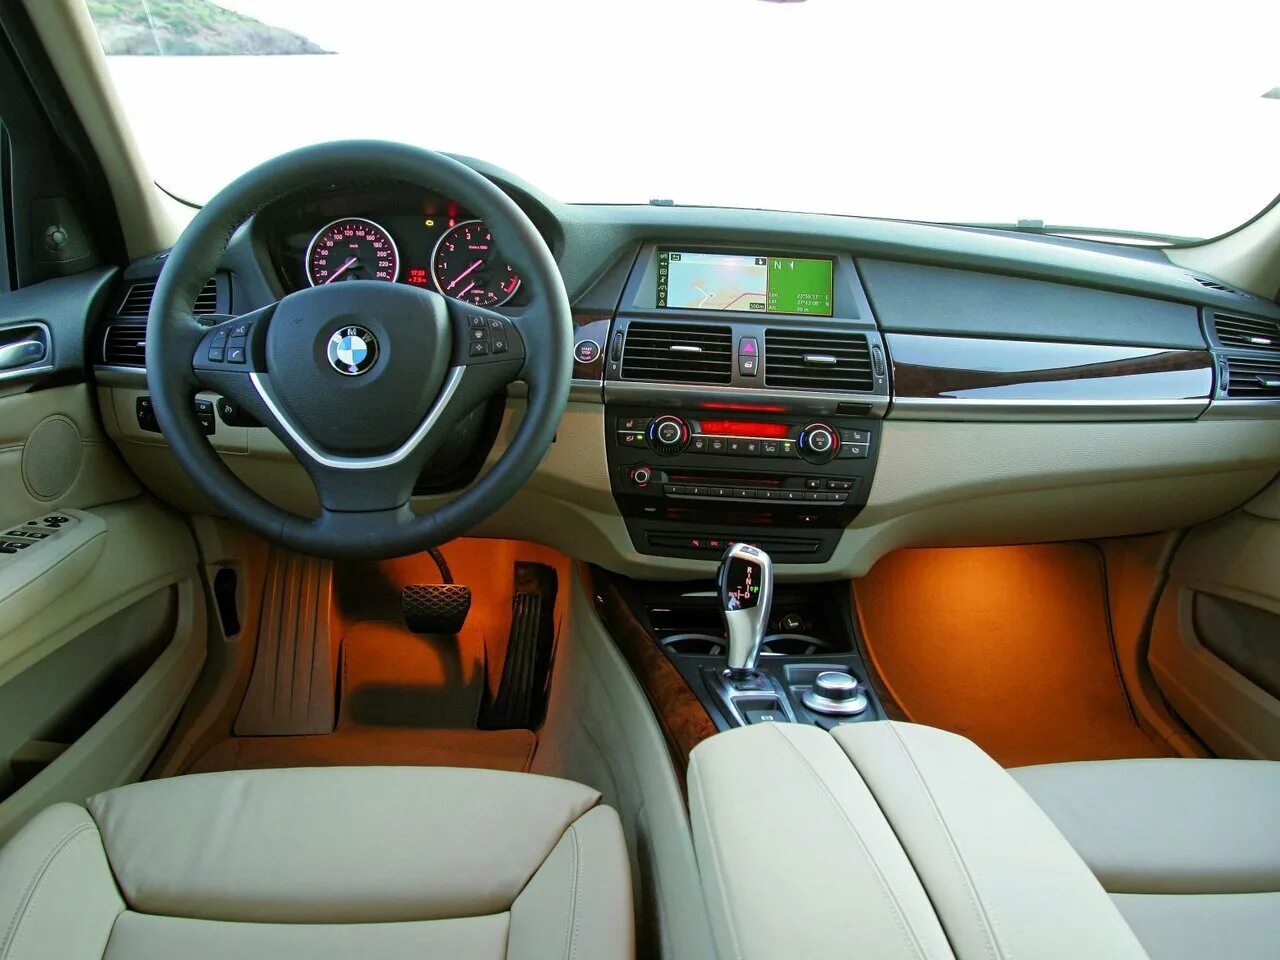 Bmw x5 2006. BMW x5 e70 Interior. BMW x5 2007 Interior. БМВ джип х5 салон.